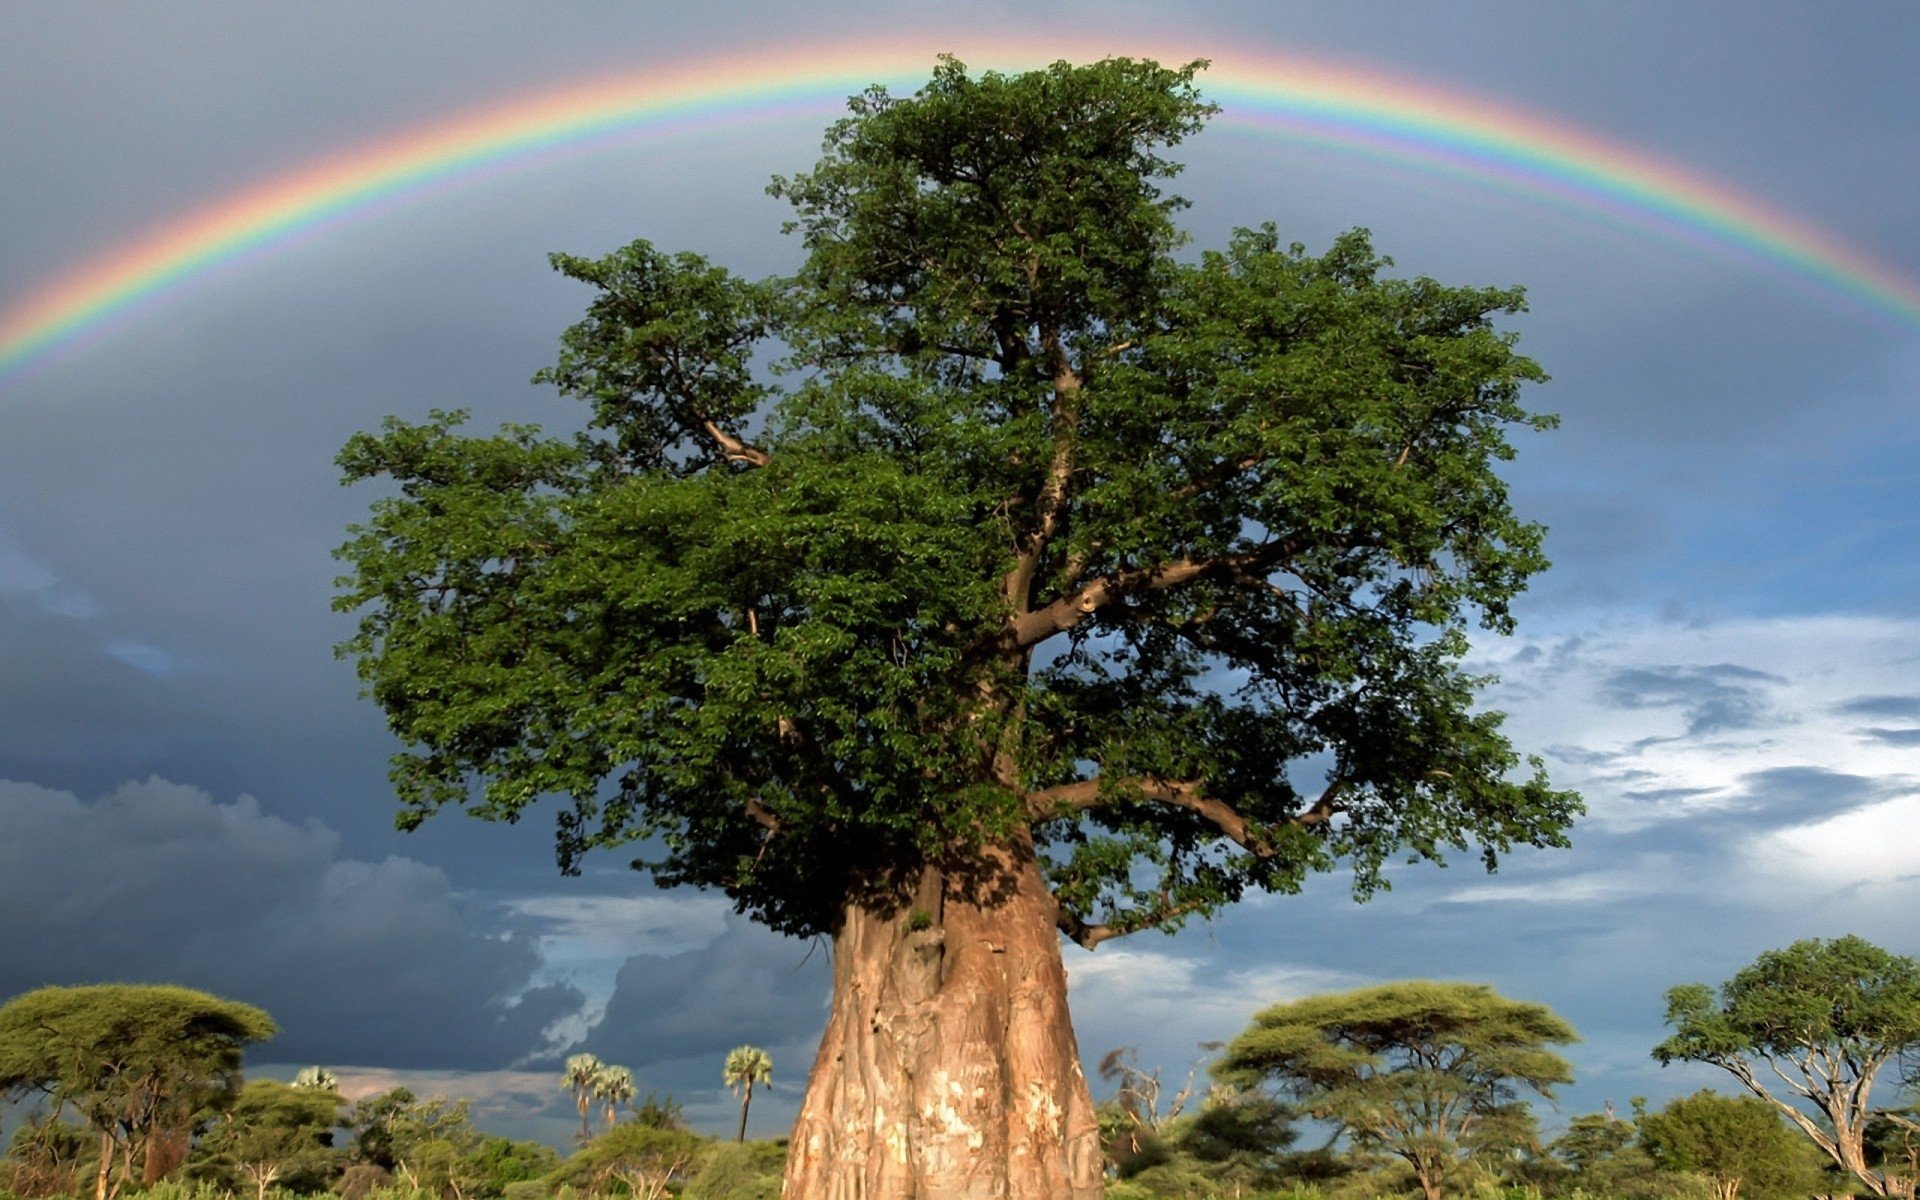 My new tree. Баобаб National Geographic. Радужный баобаб. Красивое дерево. Могучее дерево.